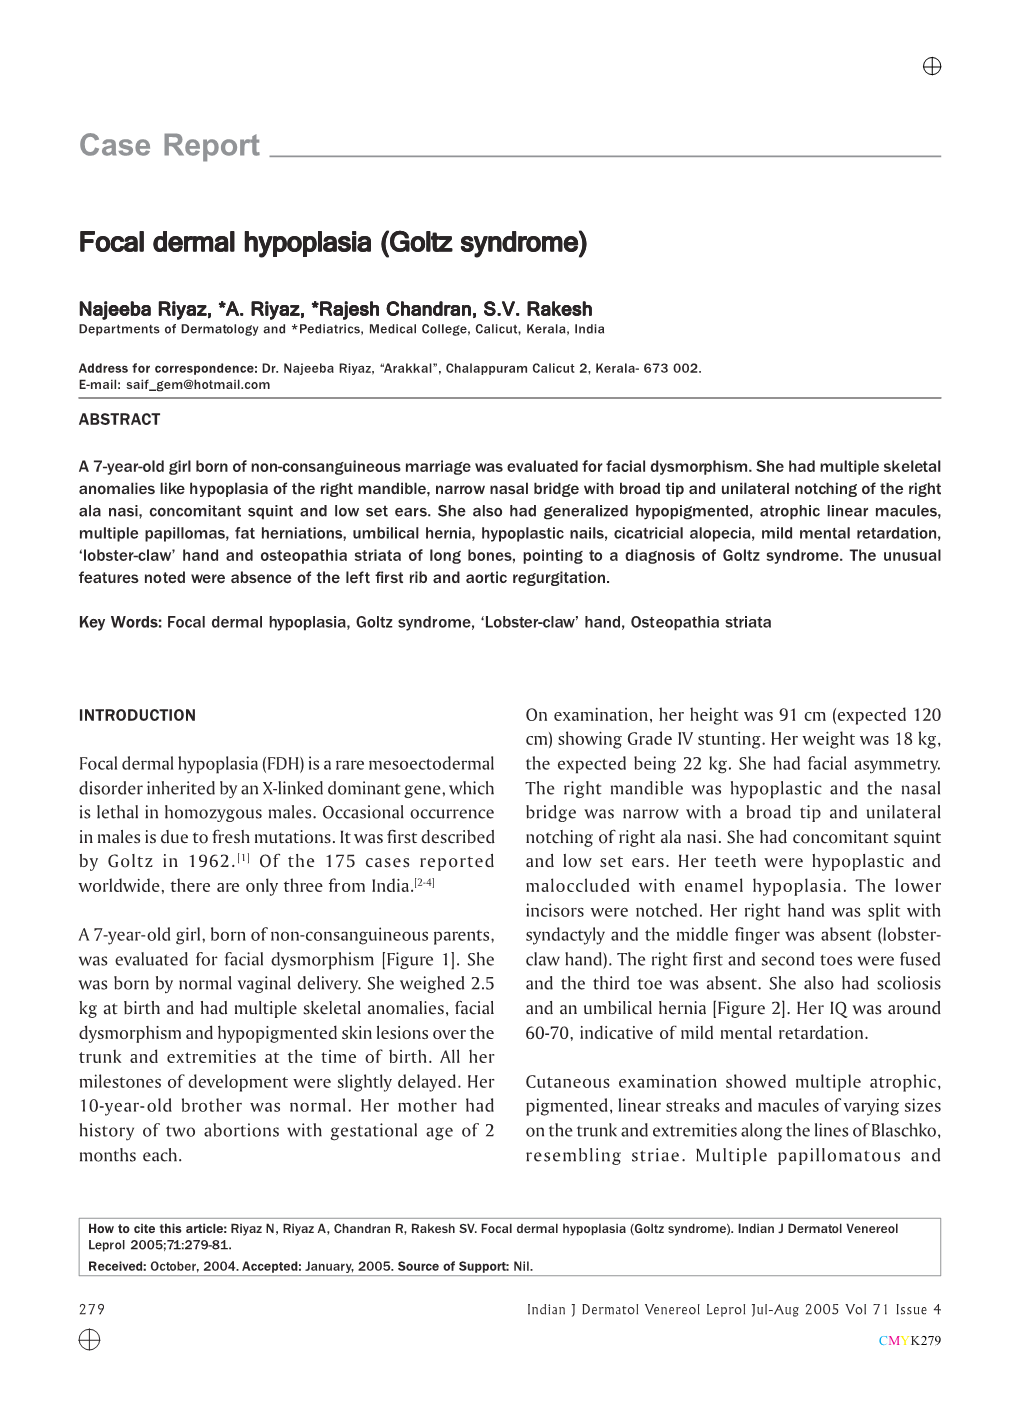 Focal Dermal Hypoplasia (Goltz Syndrome)